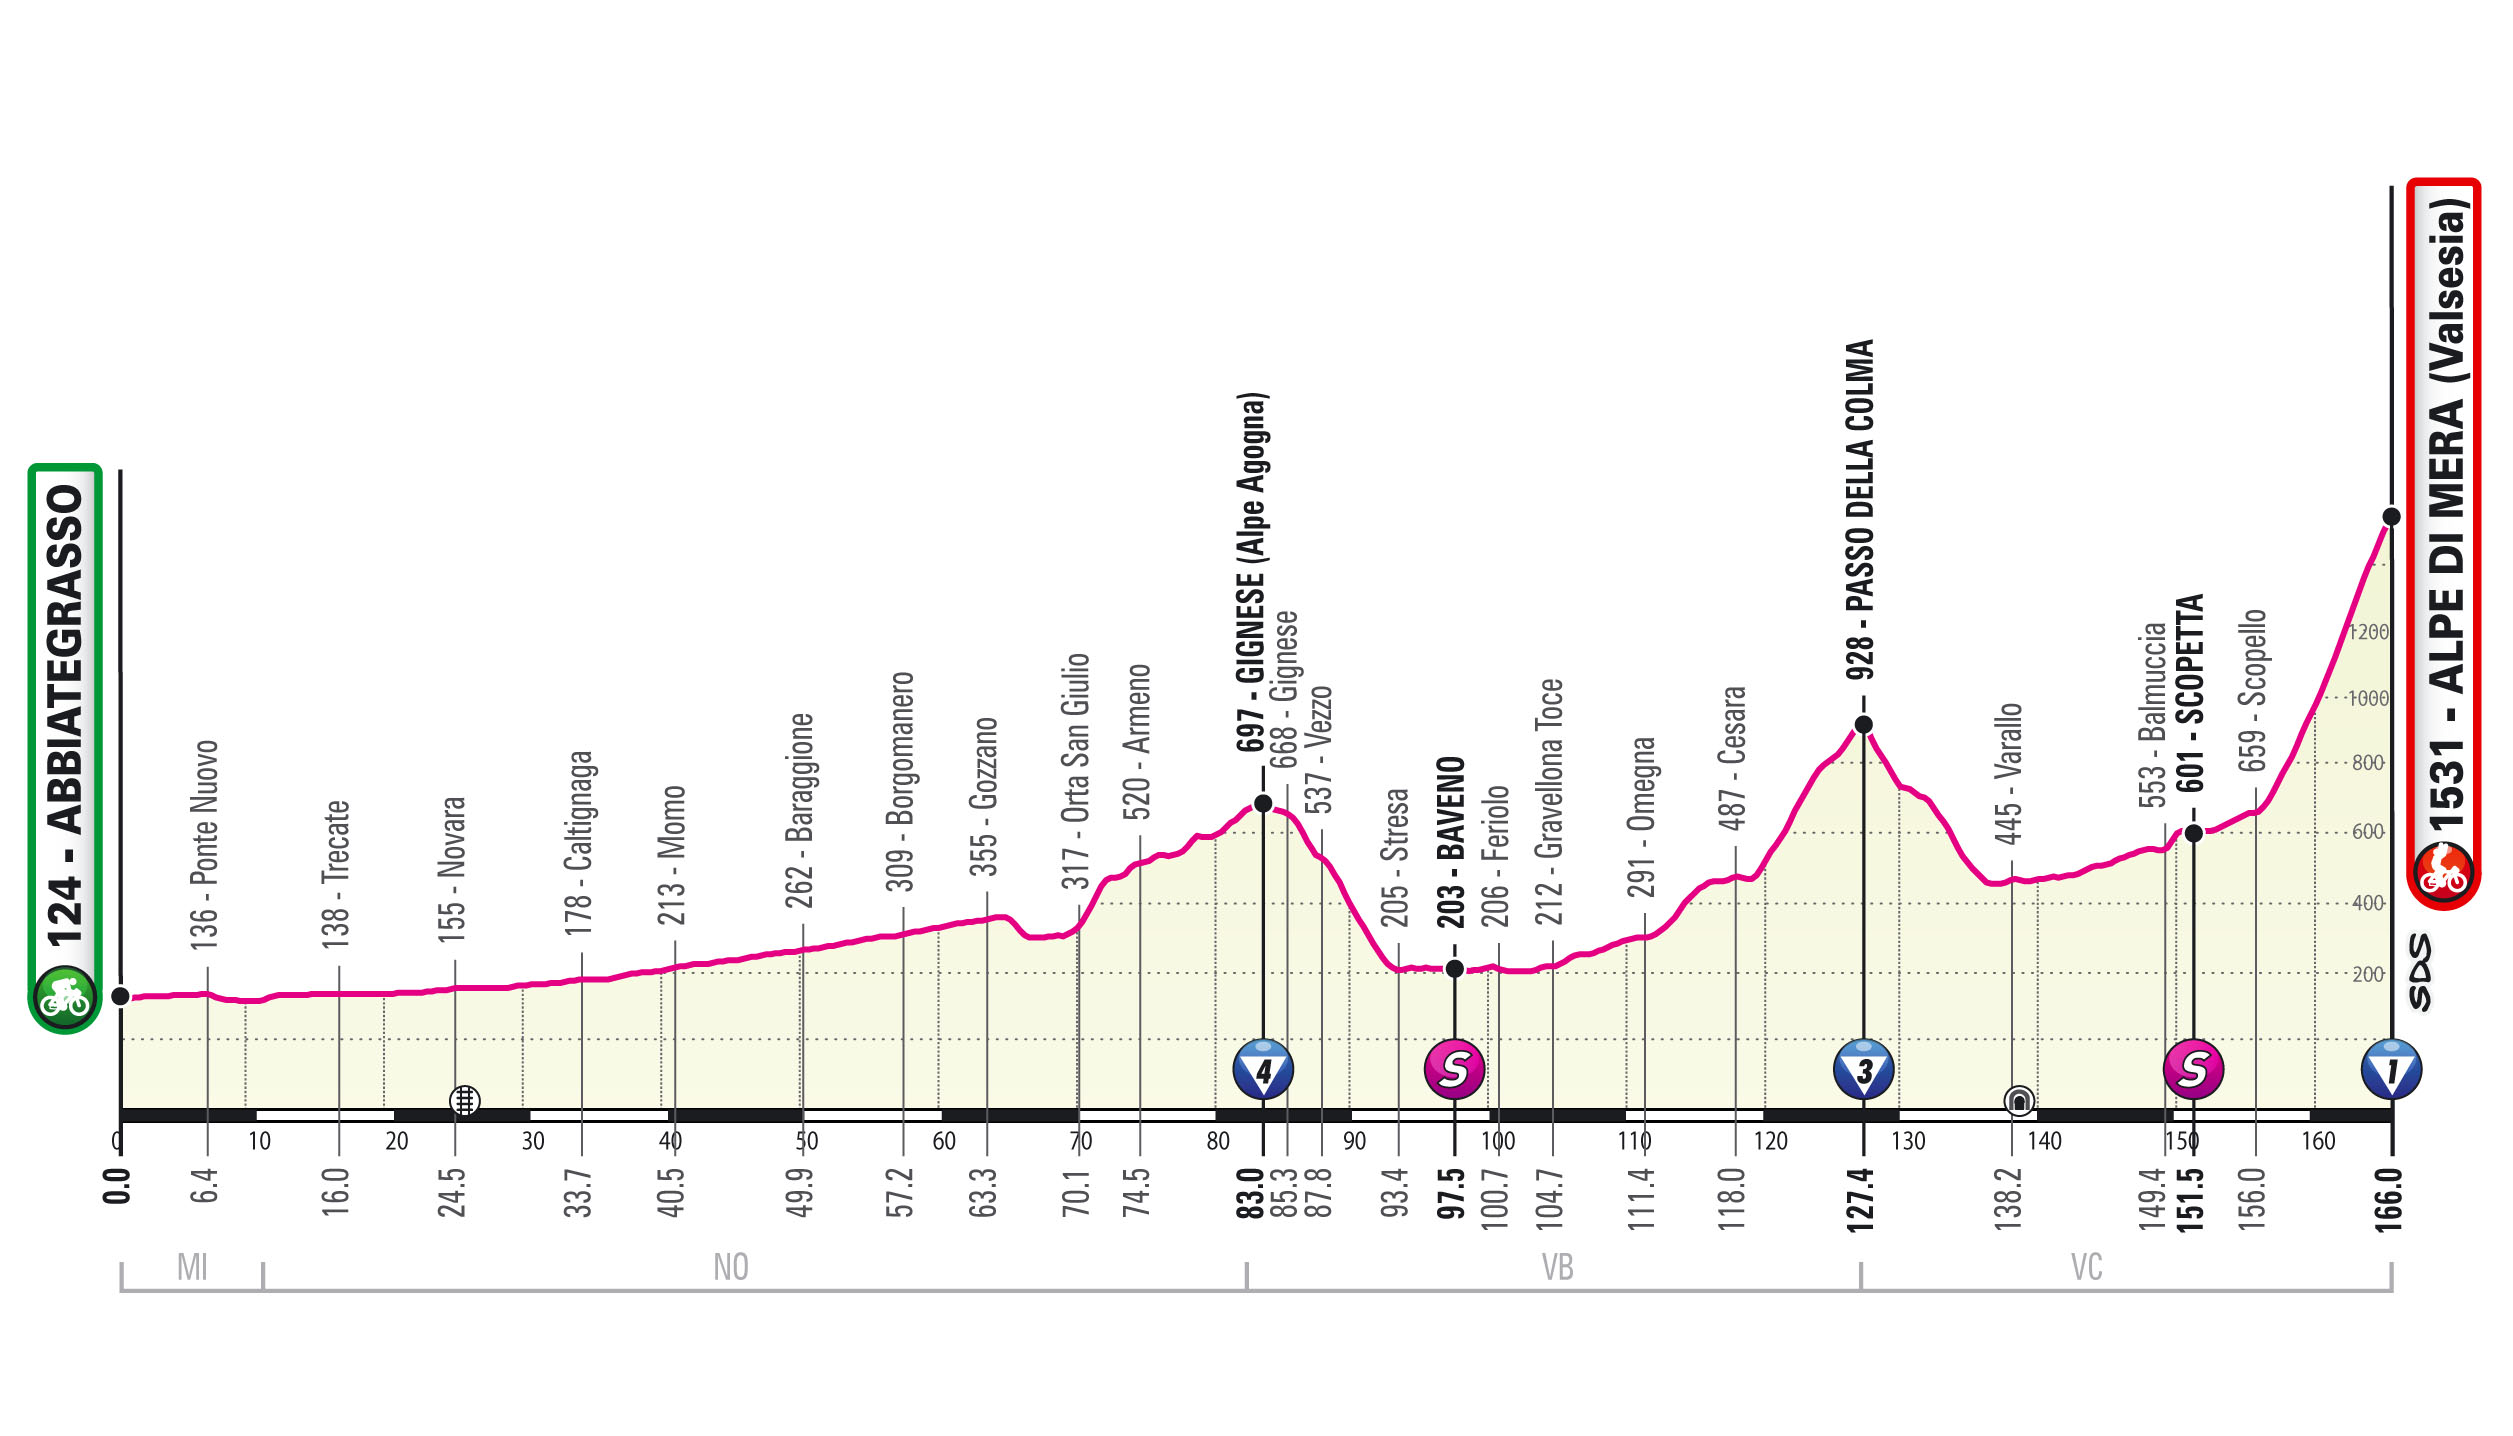 Profil Étape 19 Giro d’Italia 2021: Abbiategrasso, Alpe di Mera (Valsesia)